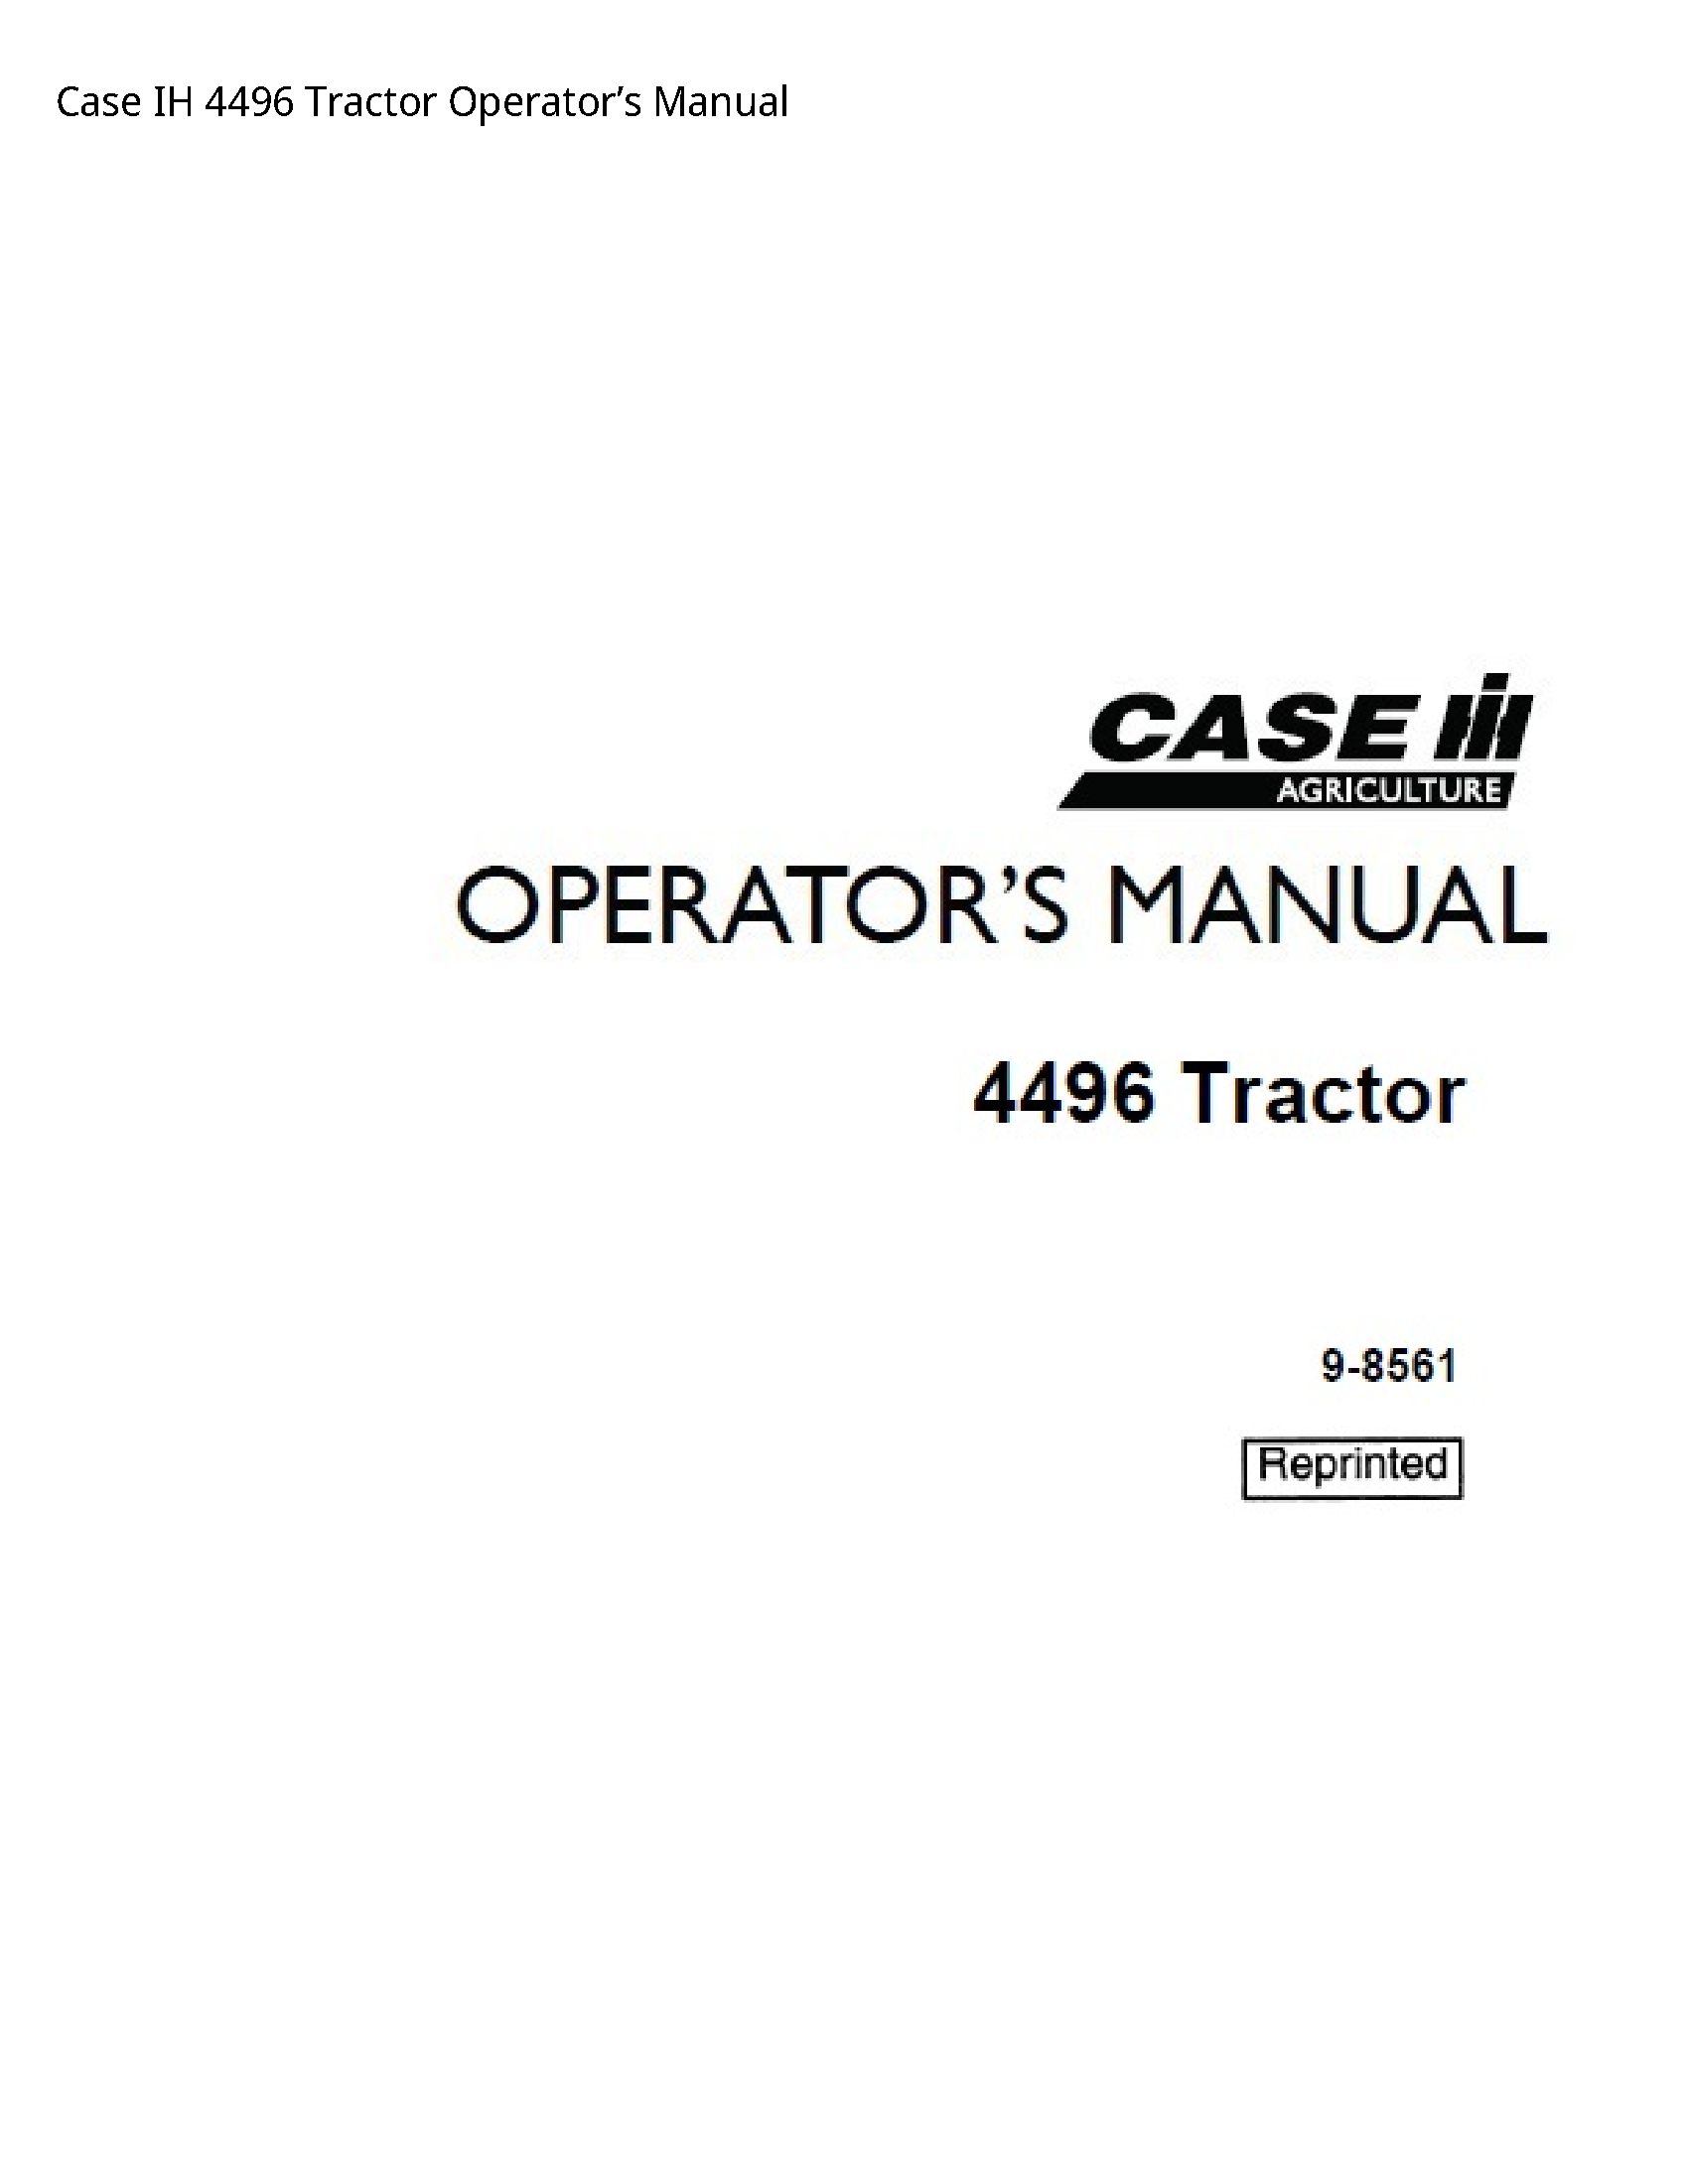 Case/Case IH 4496 IH Tractor Operator’s manual